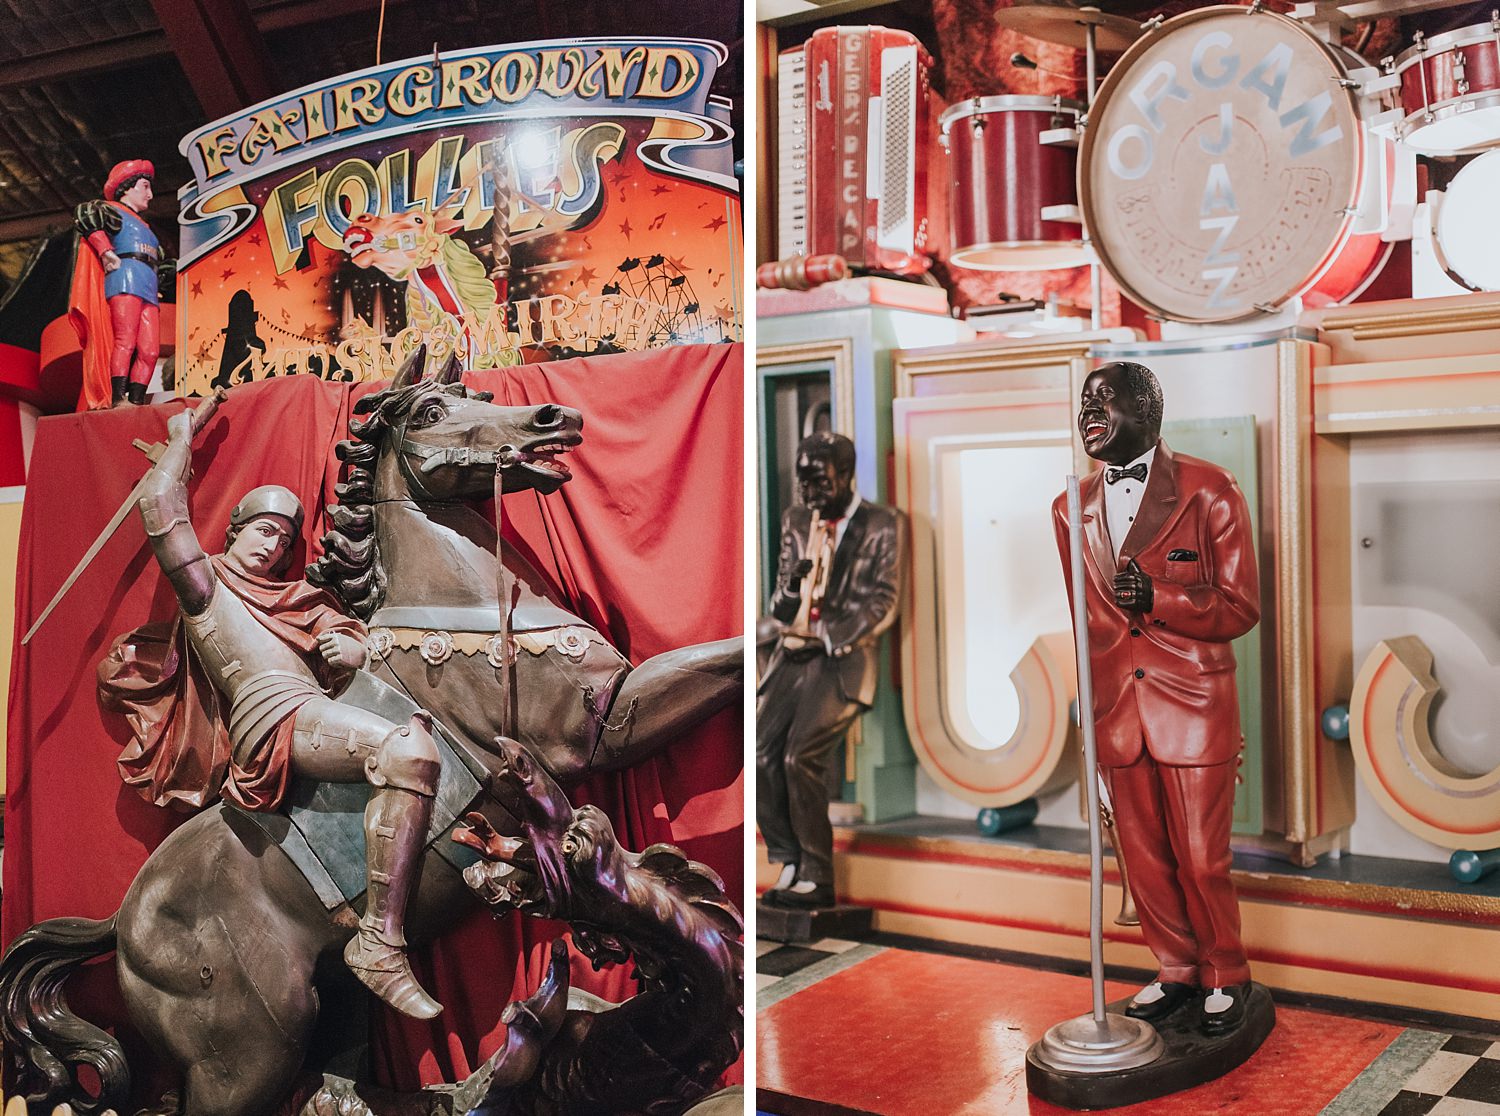 fairground follies theme park rides and sideshows